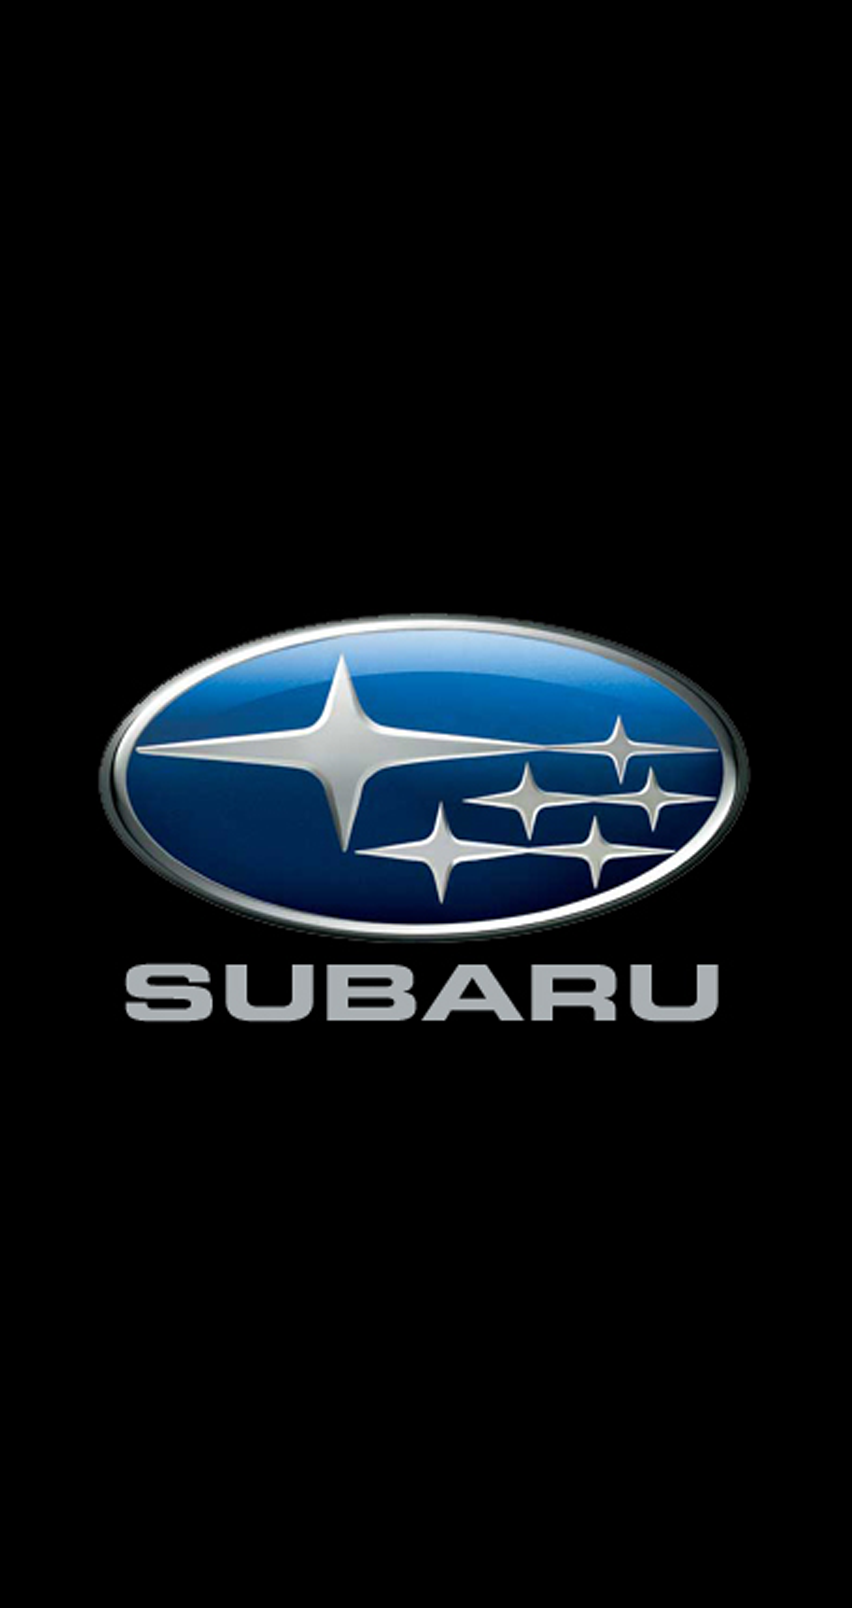 Share Subaru Iphone 6 852 X 1608 Wallpapers Car Rally Subaru Mobile9